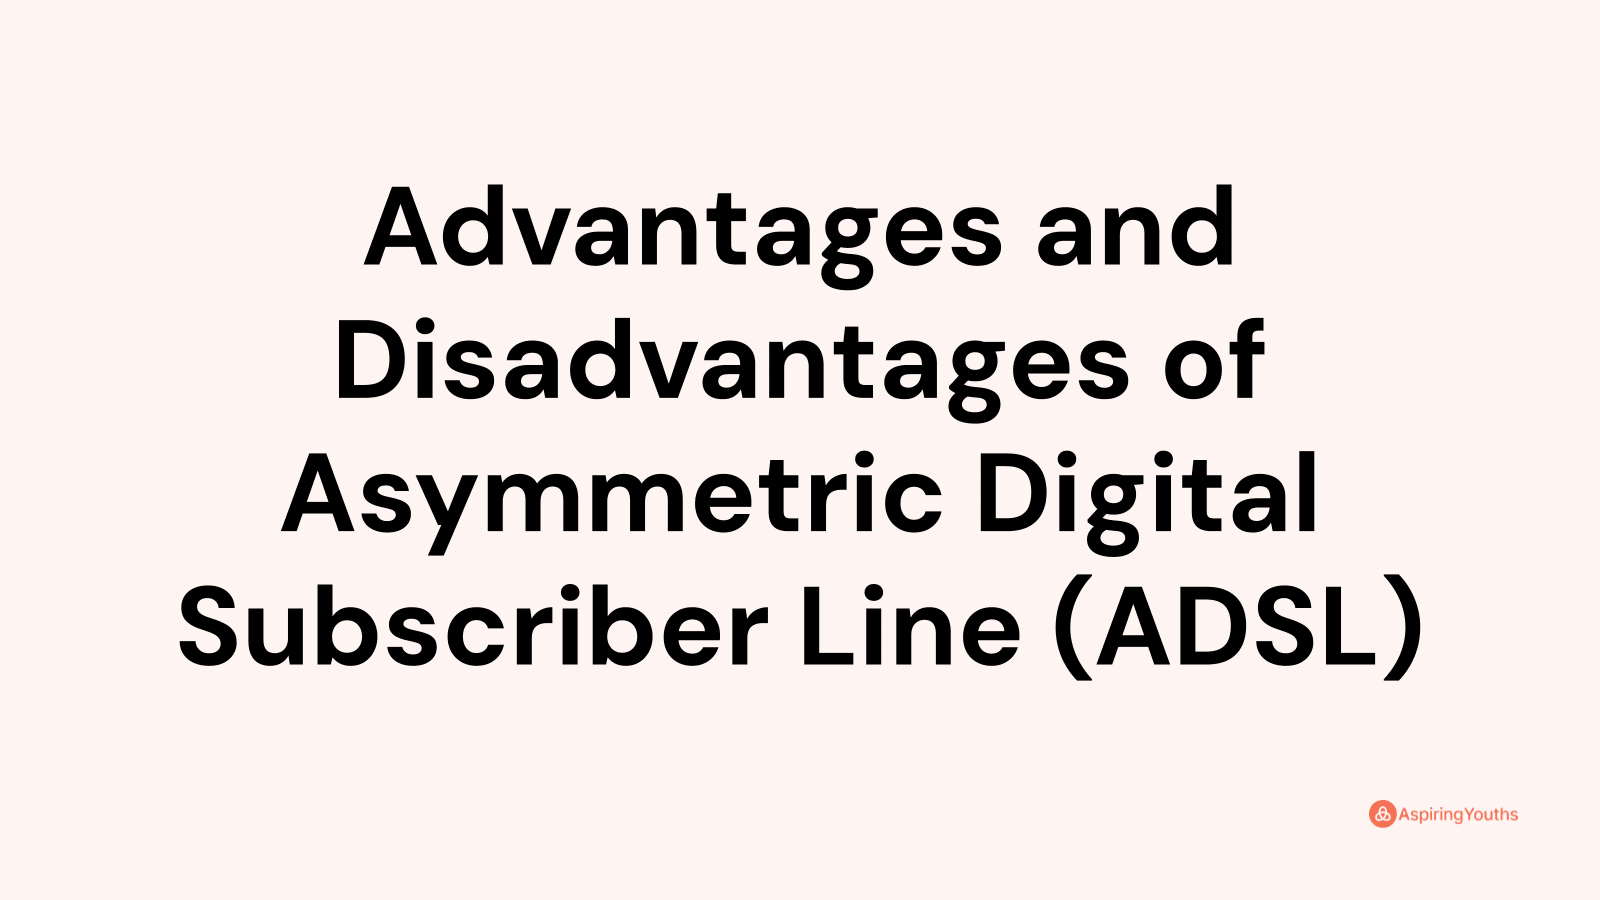 Advantages and disadvantages of Asymmetric Digital Subscriber Line (ADSL)